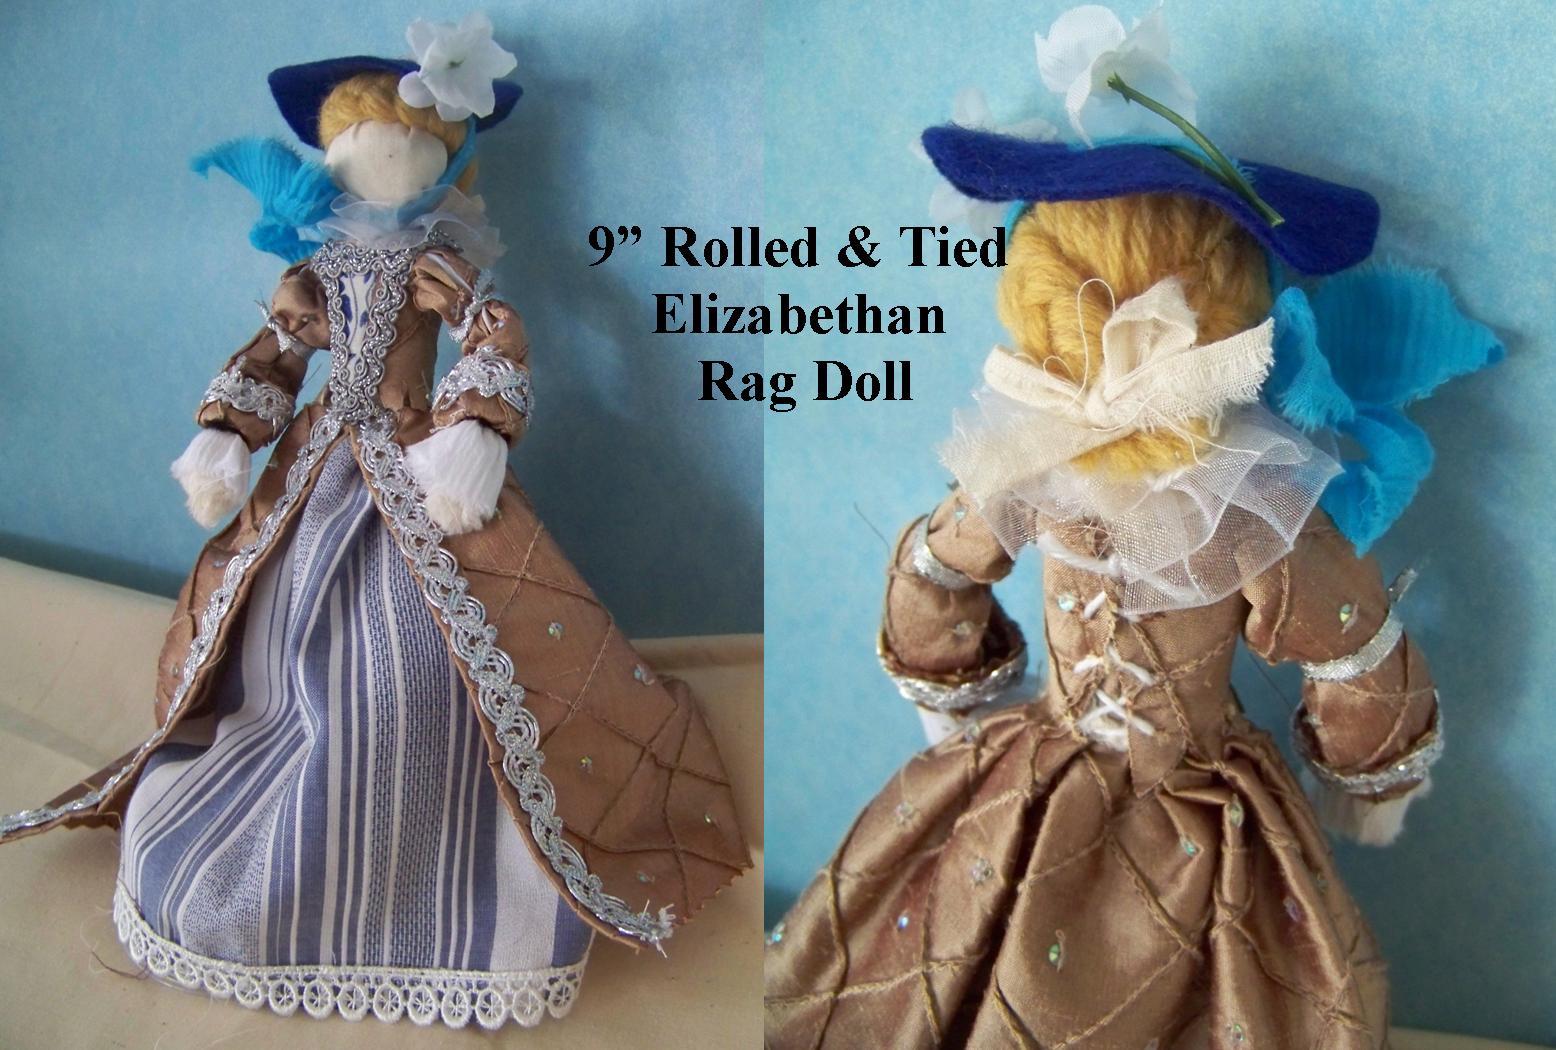 9" Rolled & Tied Elizabethan Rag Doll   •   Saturday, August 6th, 2:15 pm